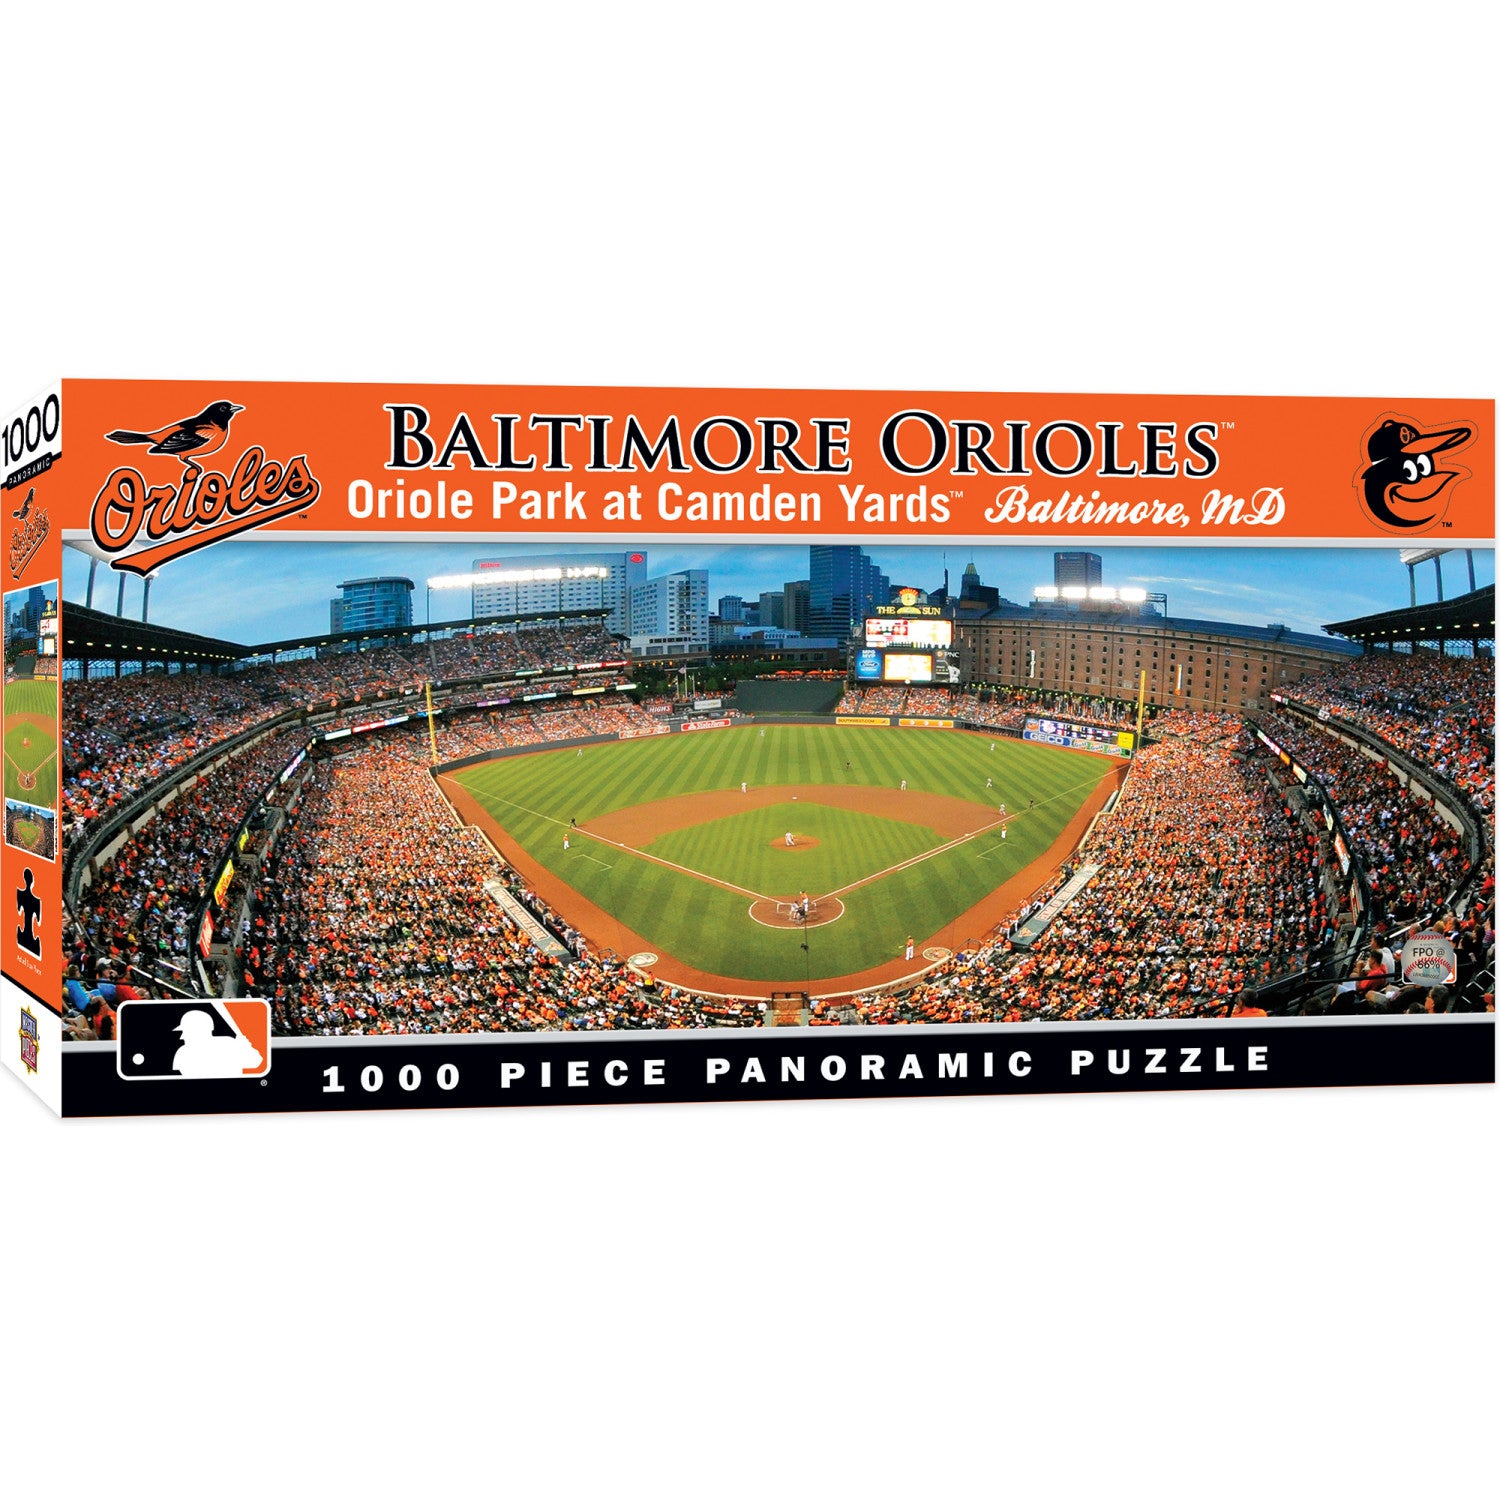 Baltimore Orioles - 1000 Piece Panoramic Jigsaw Puzzle